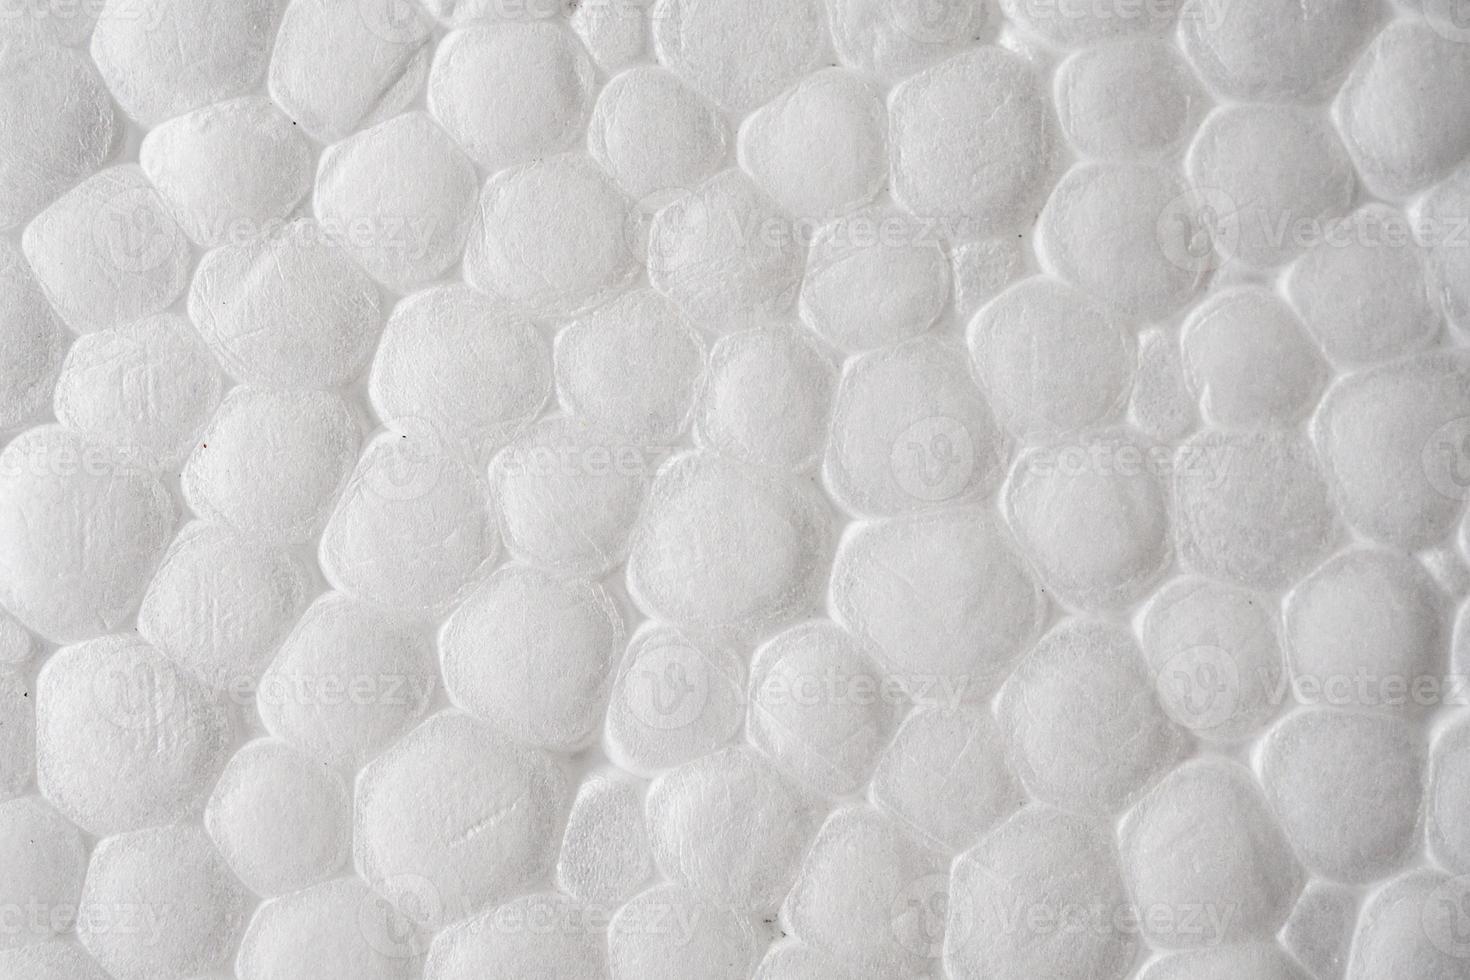 foam box texture background close up photo